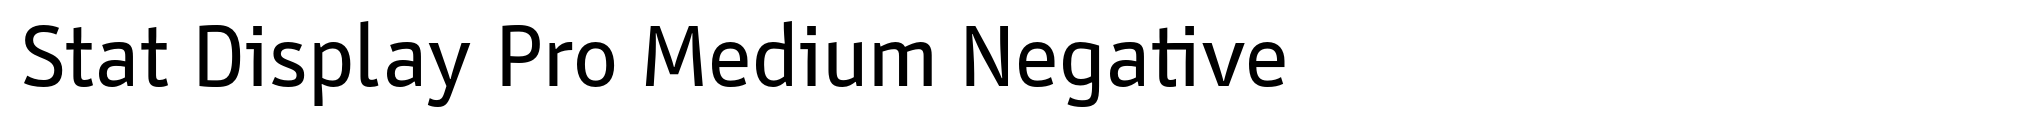 Stat Display Pro Medium Negative image